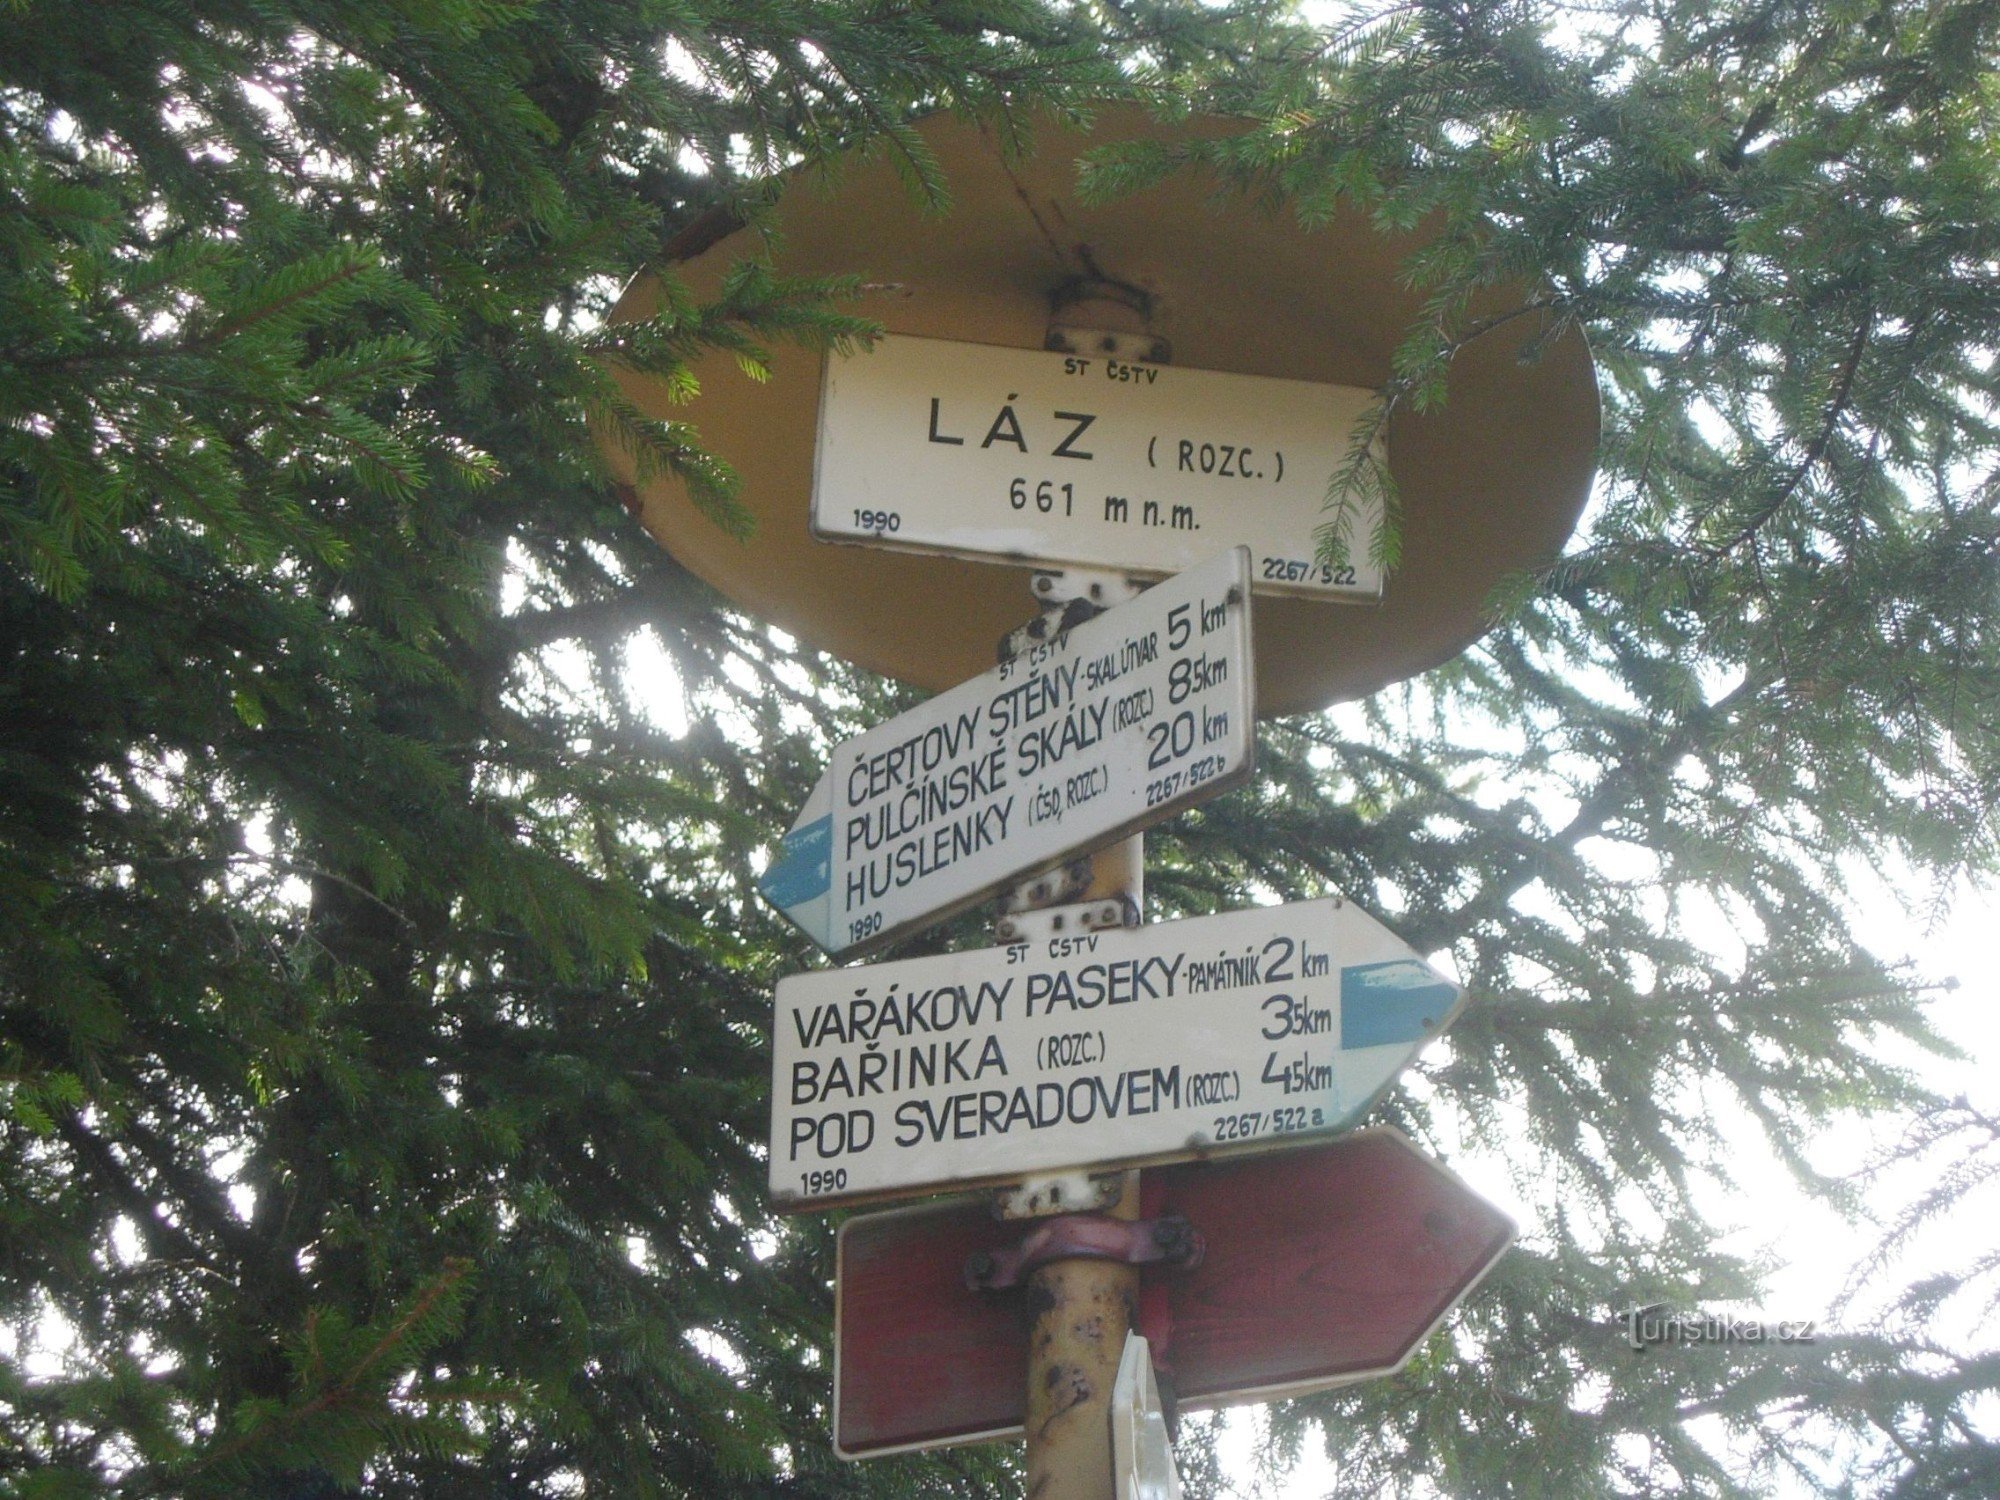 Spa signpost